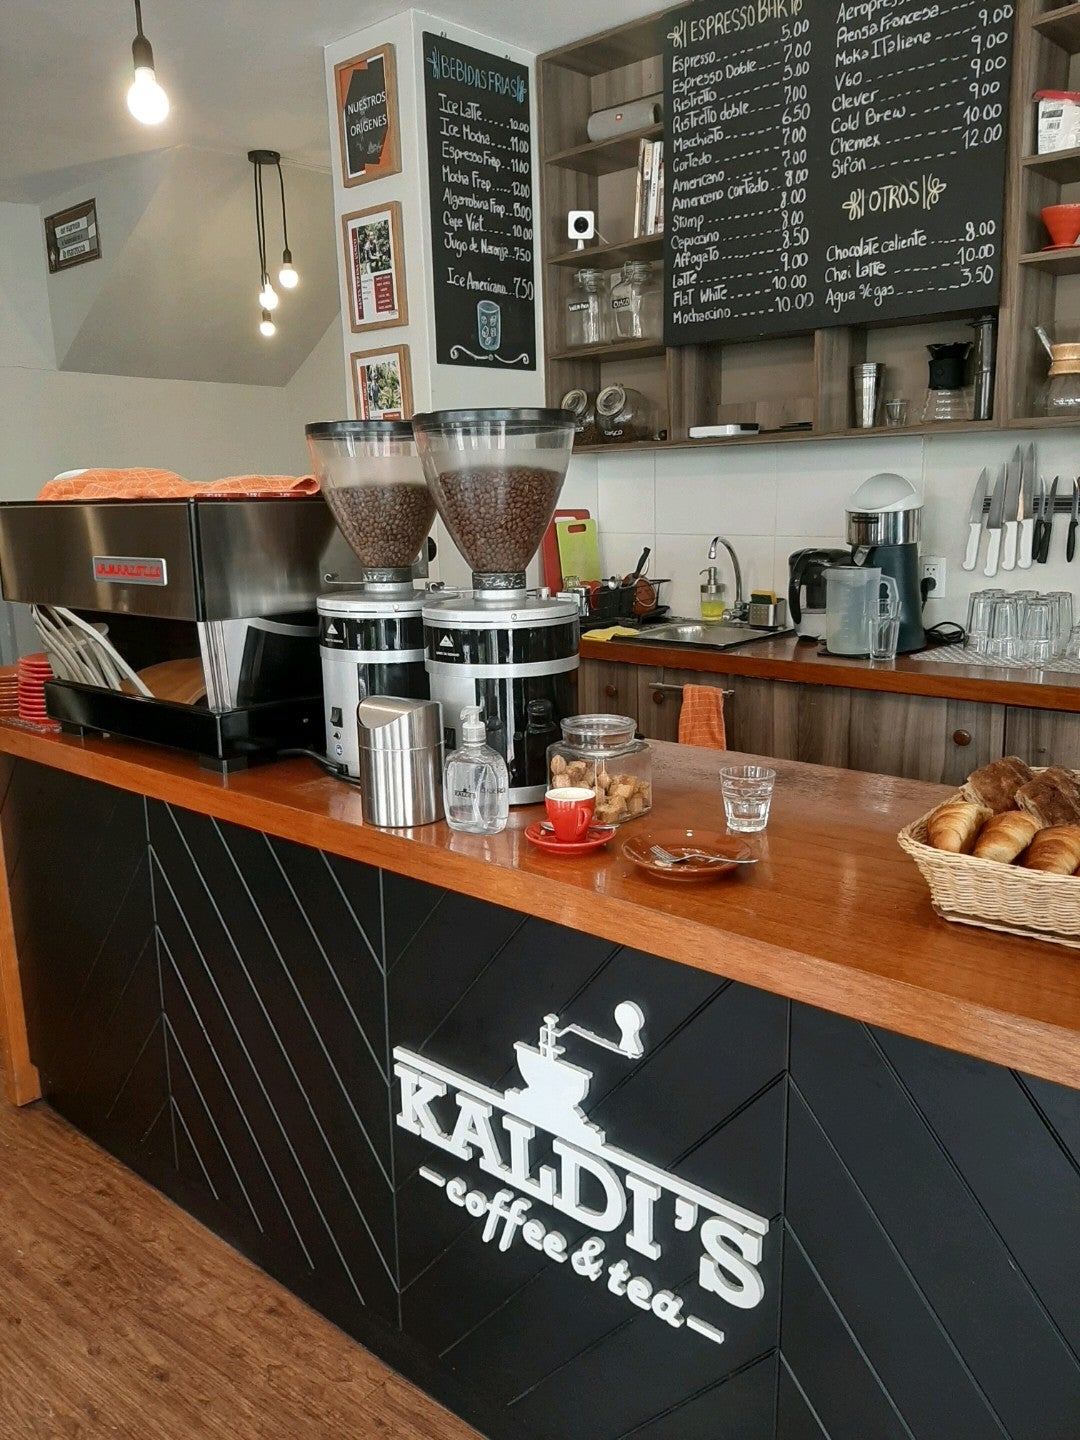 Kaldi's Coffee & Tea